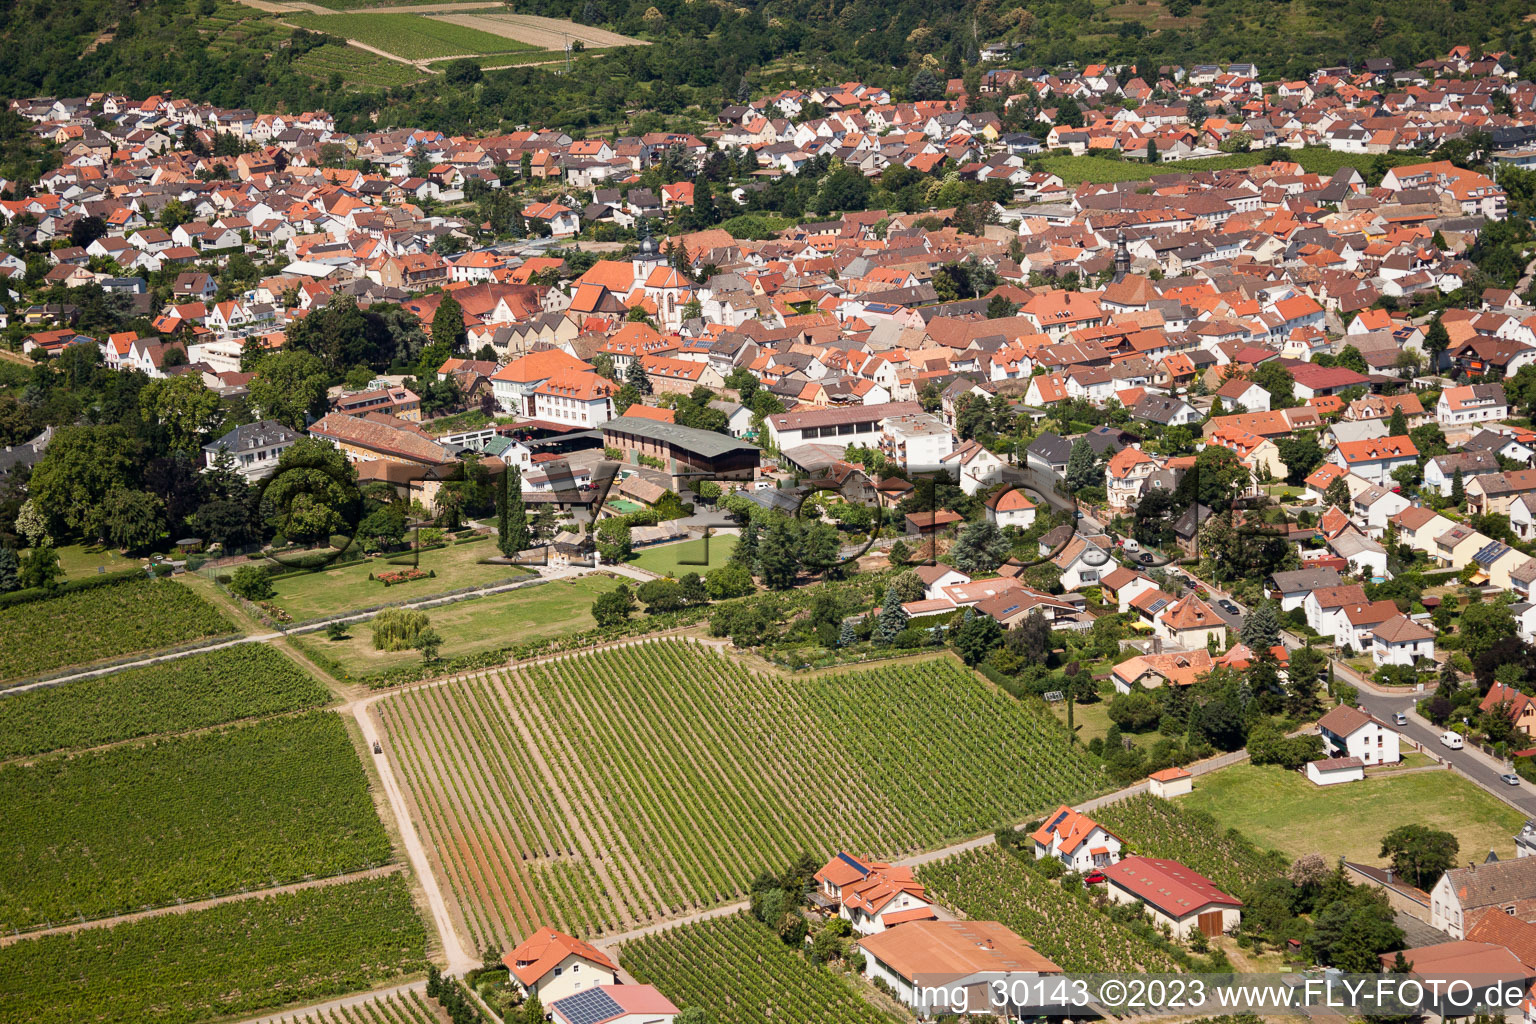 Wachenheim an der Weinstraße in the state Rhineland-Palatinate, Germany viewn from the air